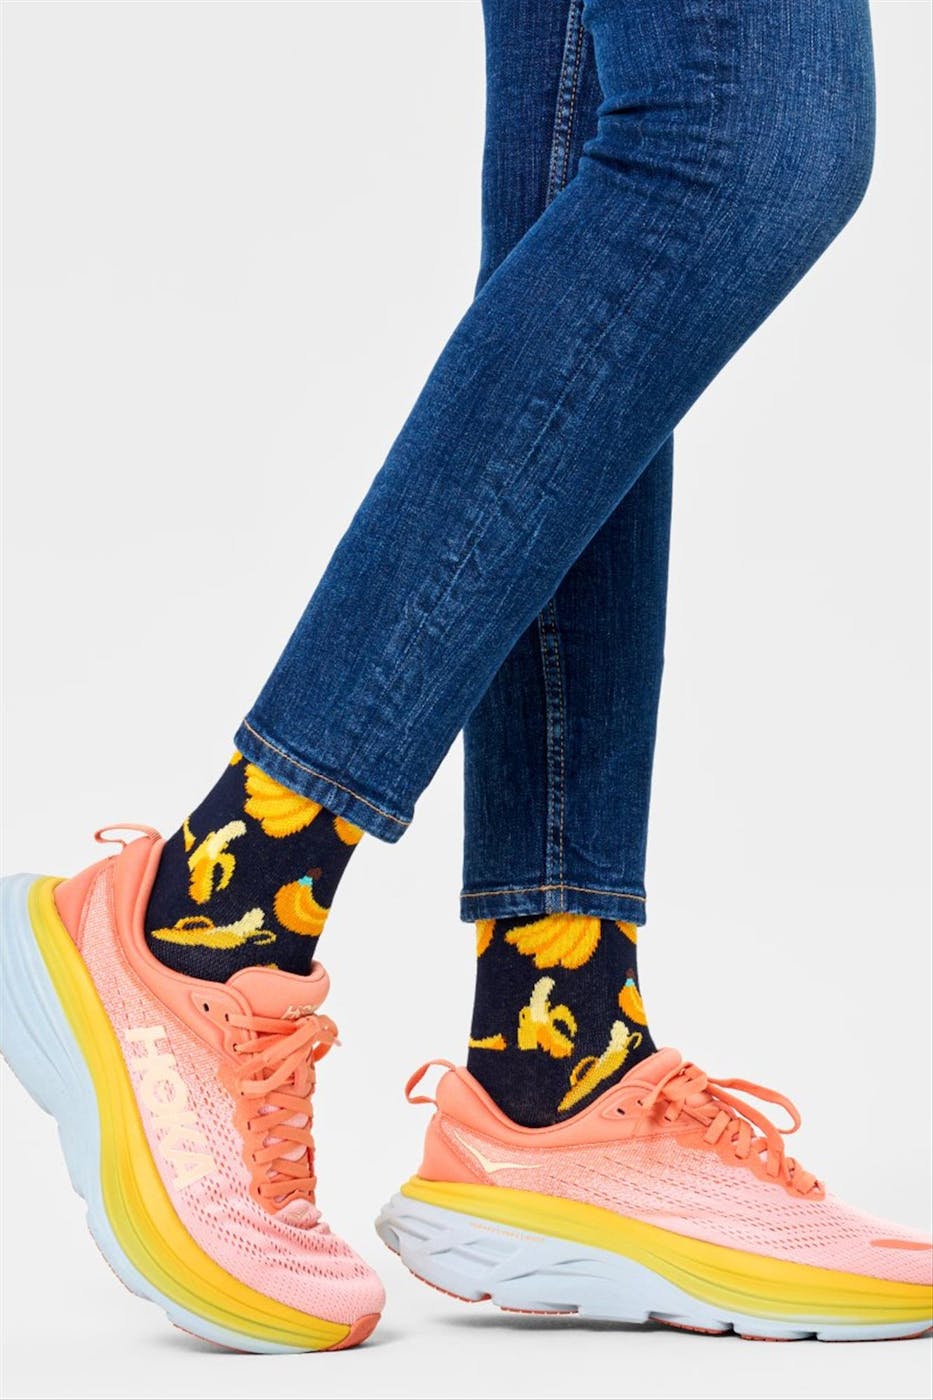 Happy Socks - Donkerblauw-gele Banana sokken, maat 36-40